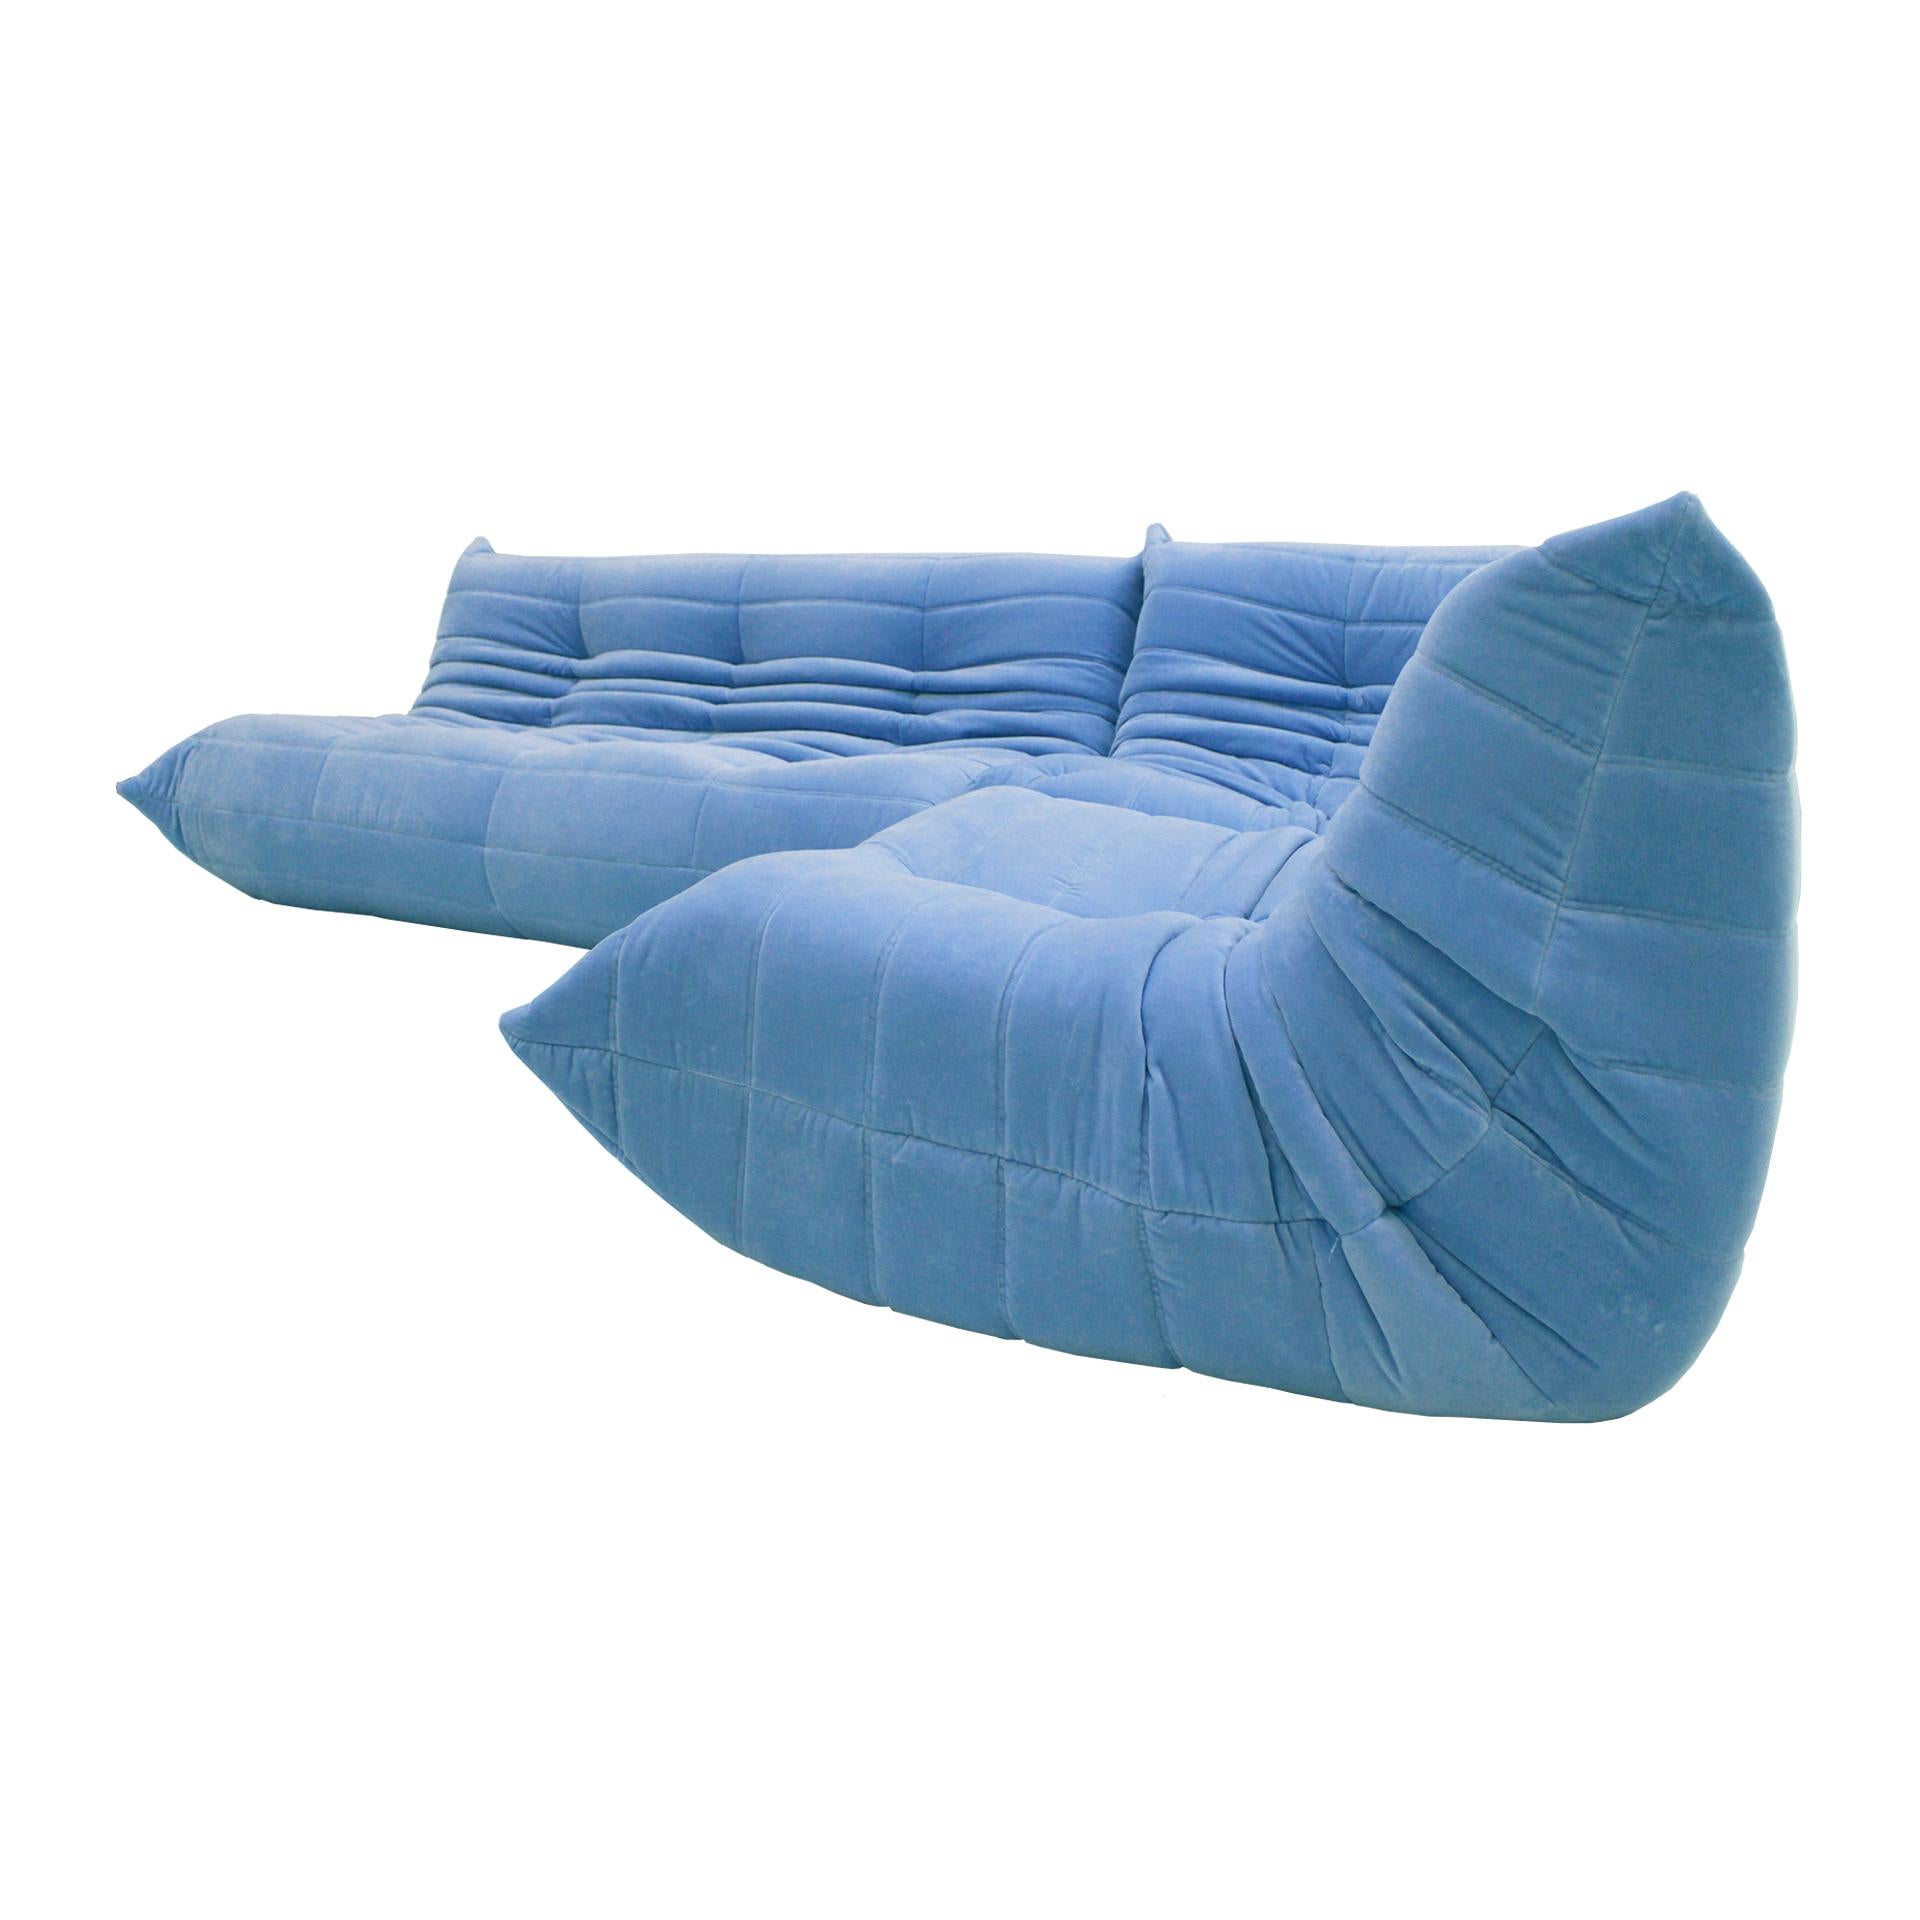 Modern Original Ligne Roset Togo Blue Cotton Velvet Sofa Designed by Michel Ducaroy